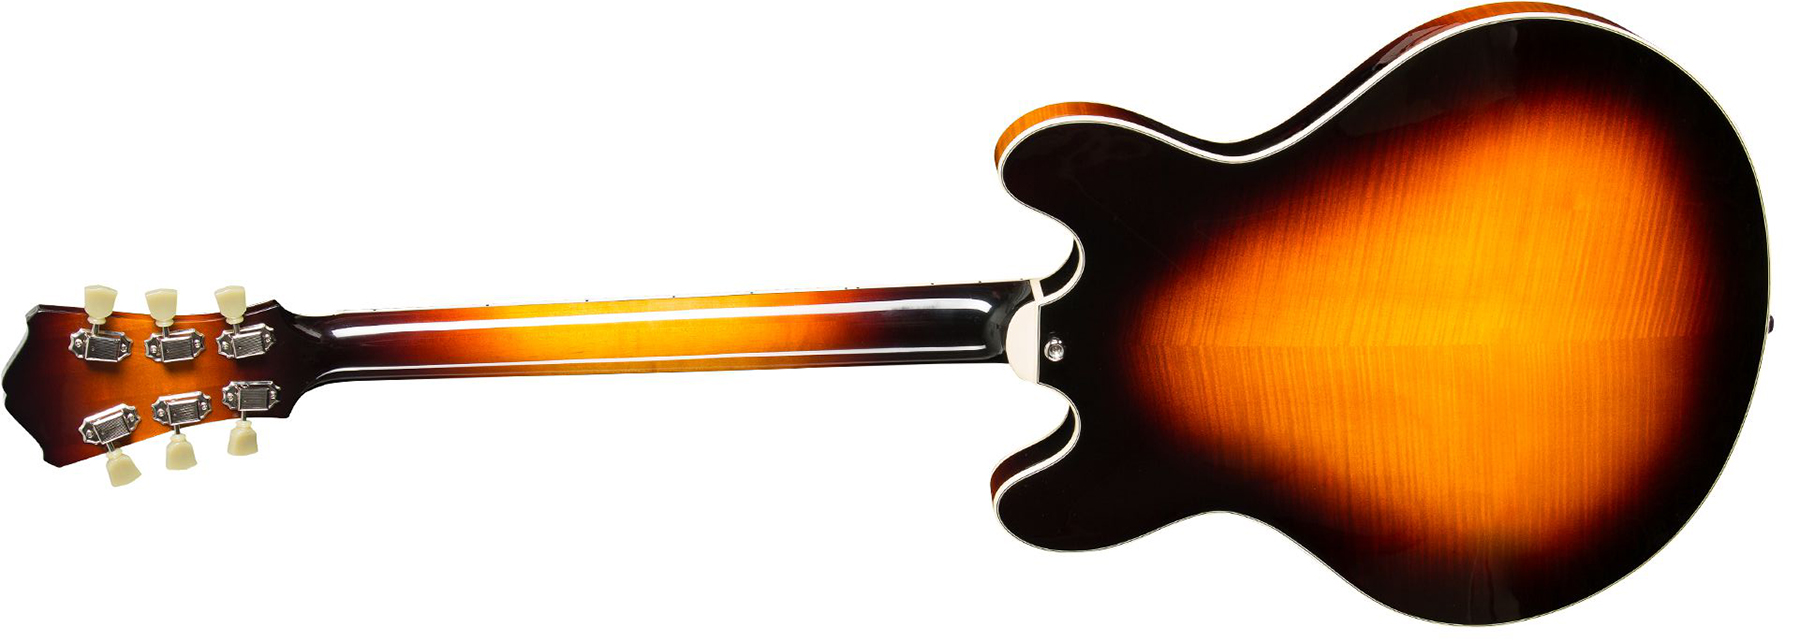 Eastman T486 Thinline Laminate Tout Erable Hh Seymour Duncan Ht Eb - Sunburst - Semi hollow elektriche gitaar - Variation 1